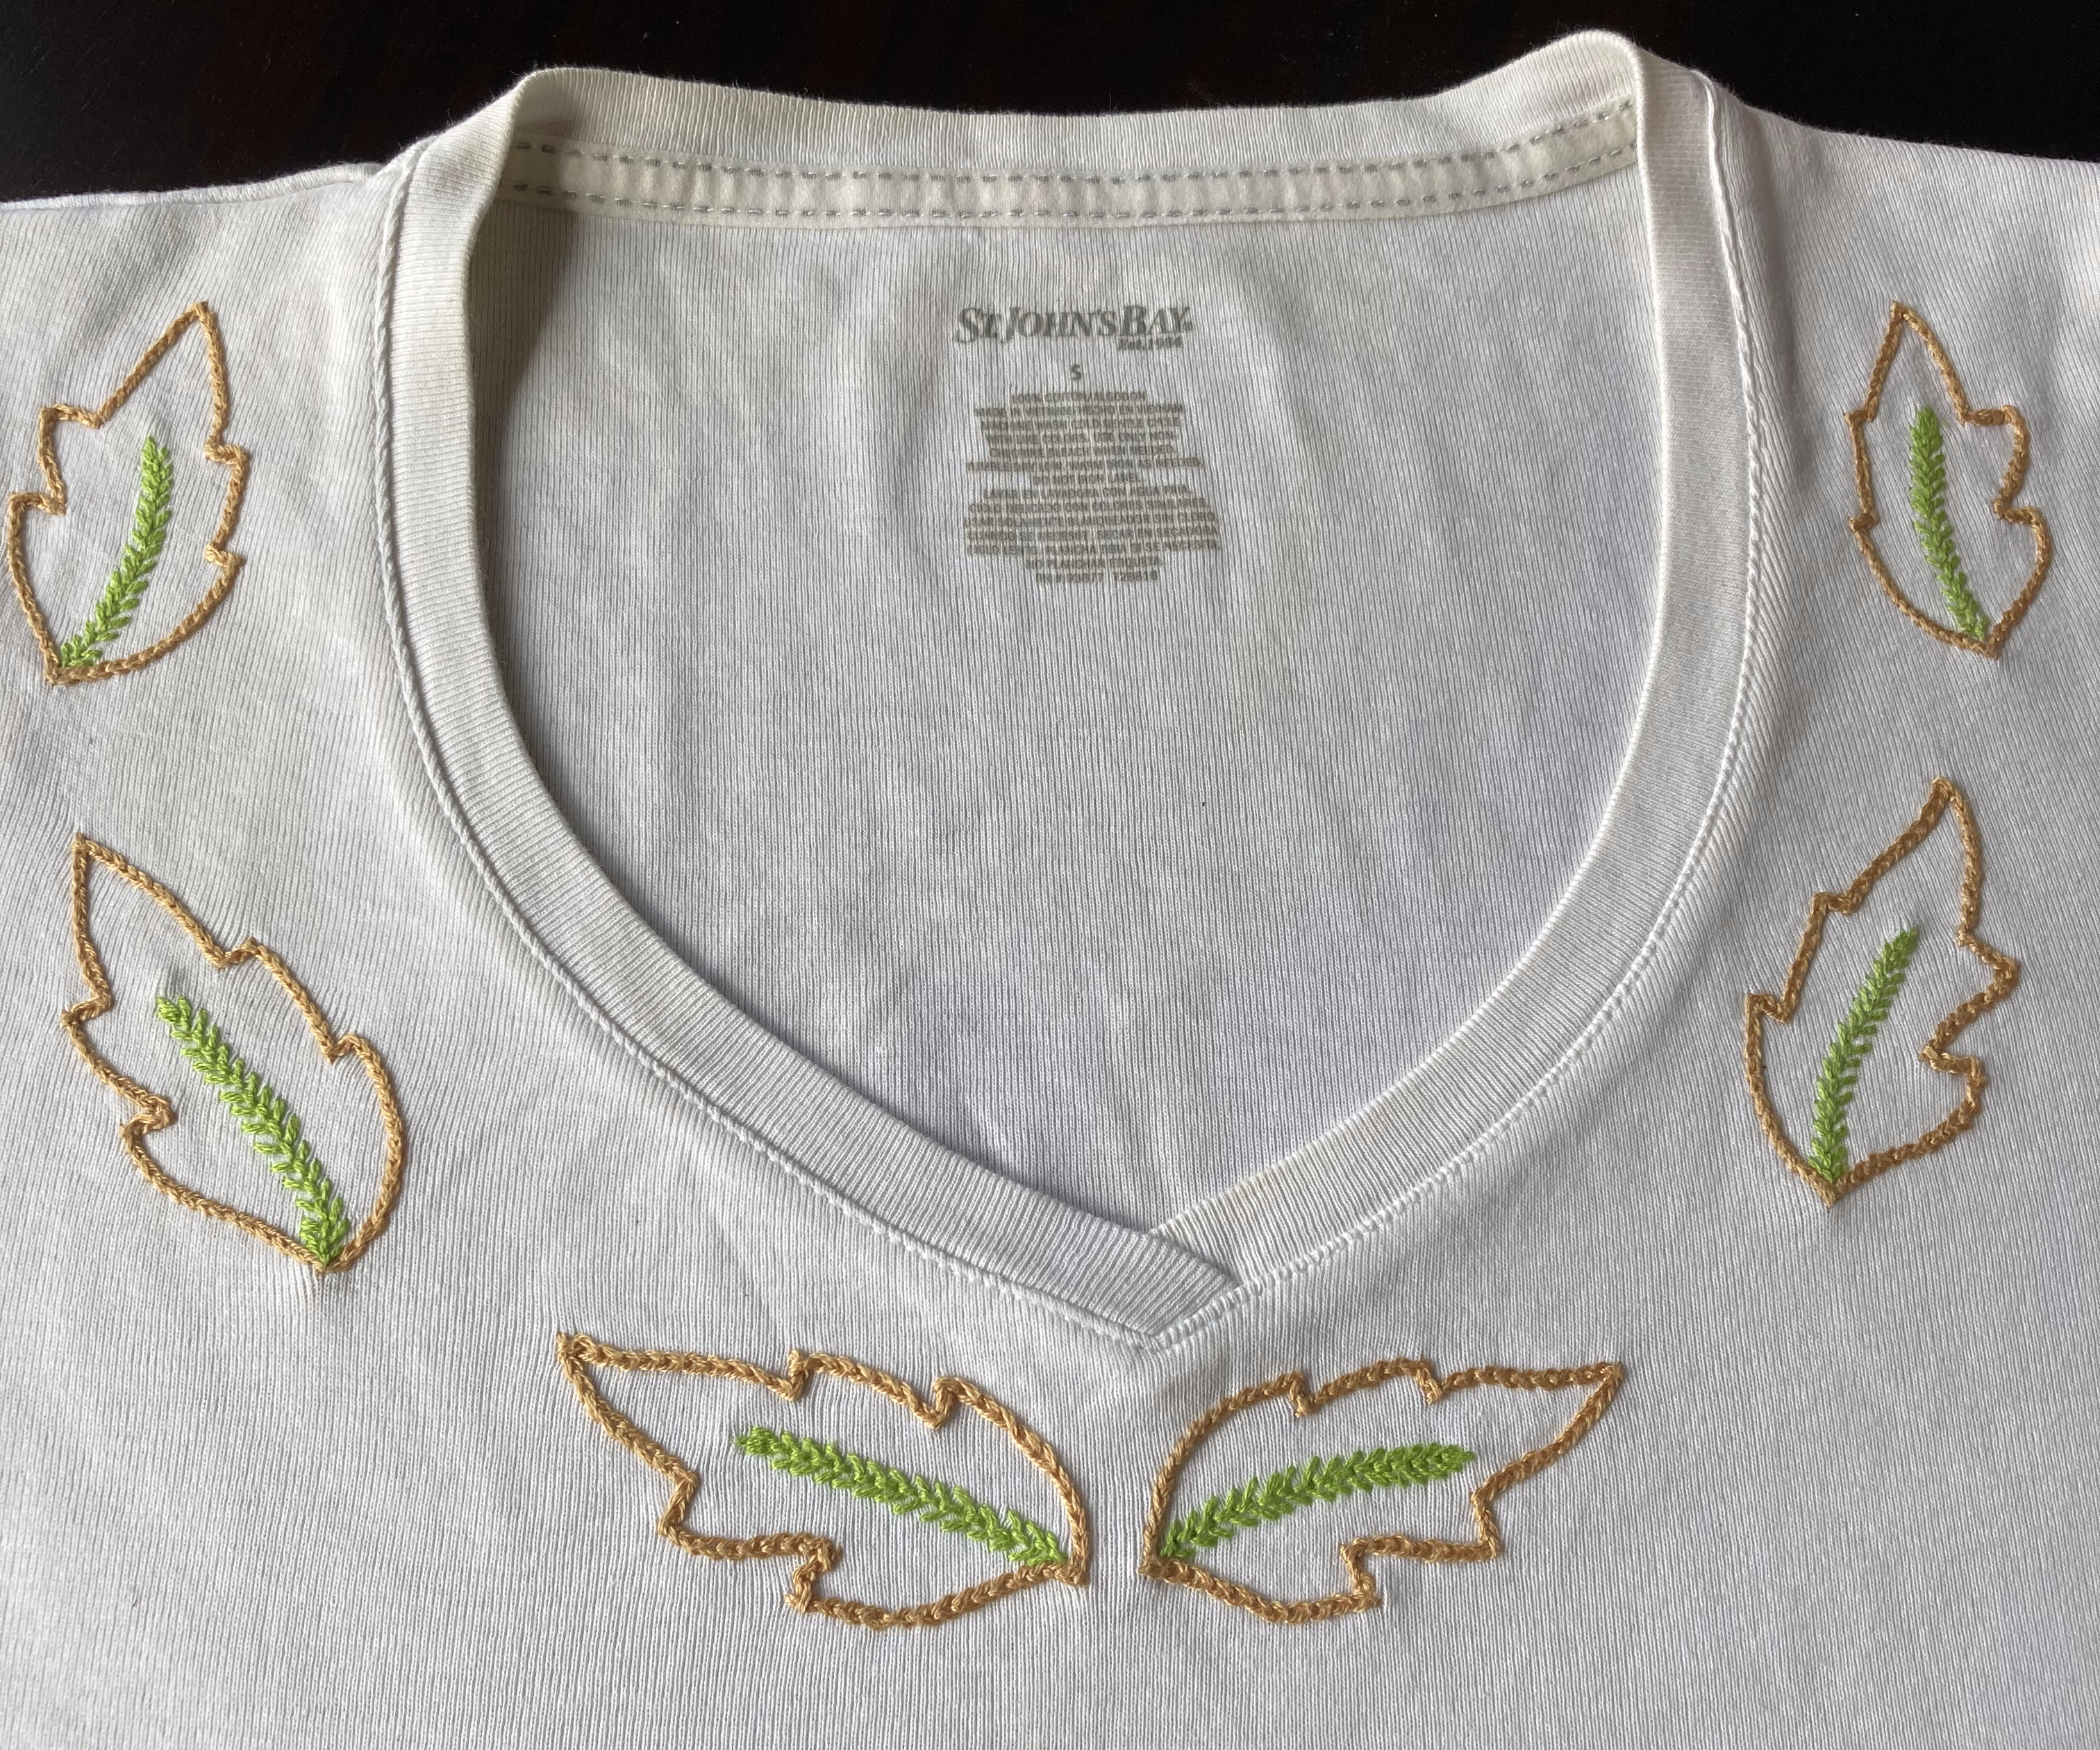 Handmade Embroidery on T-Shirt